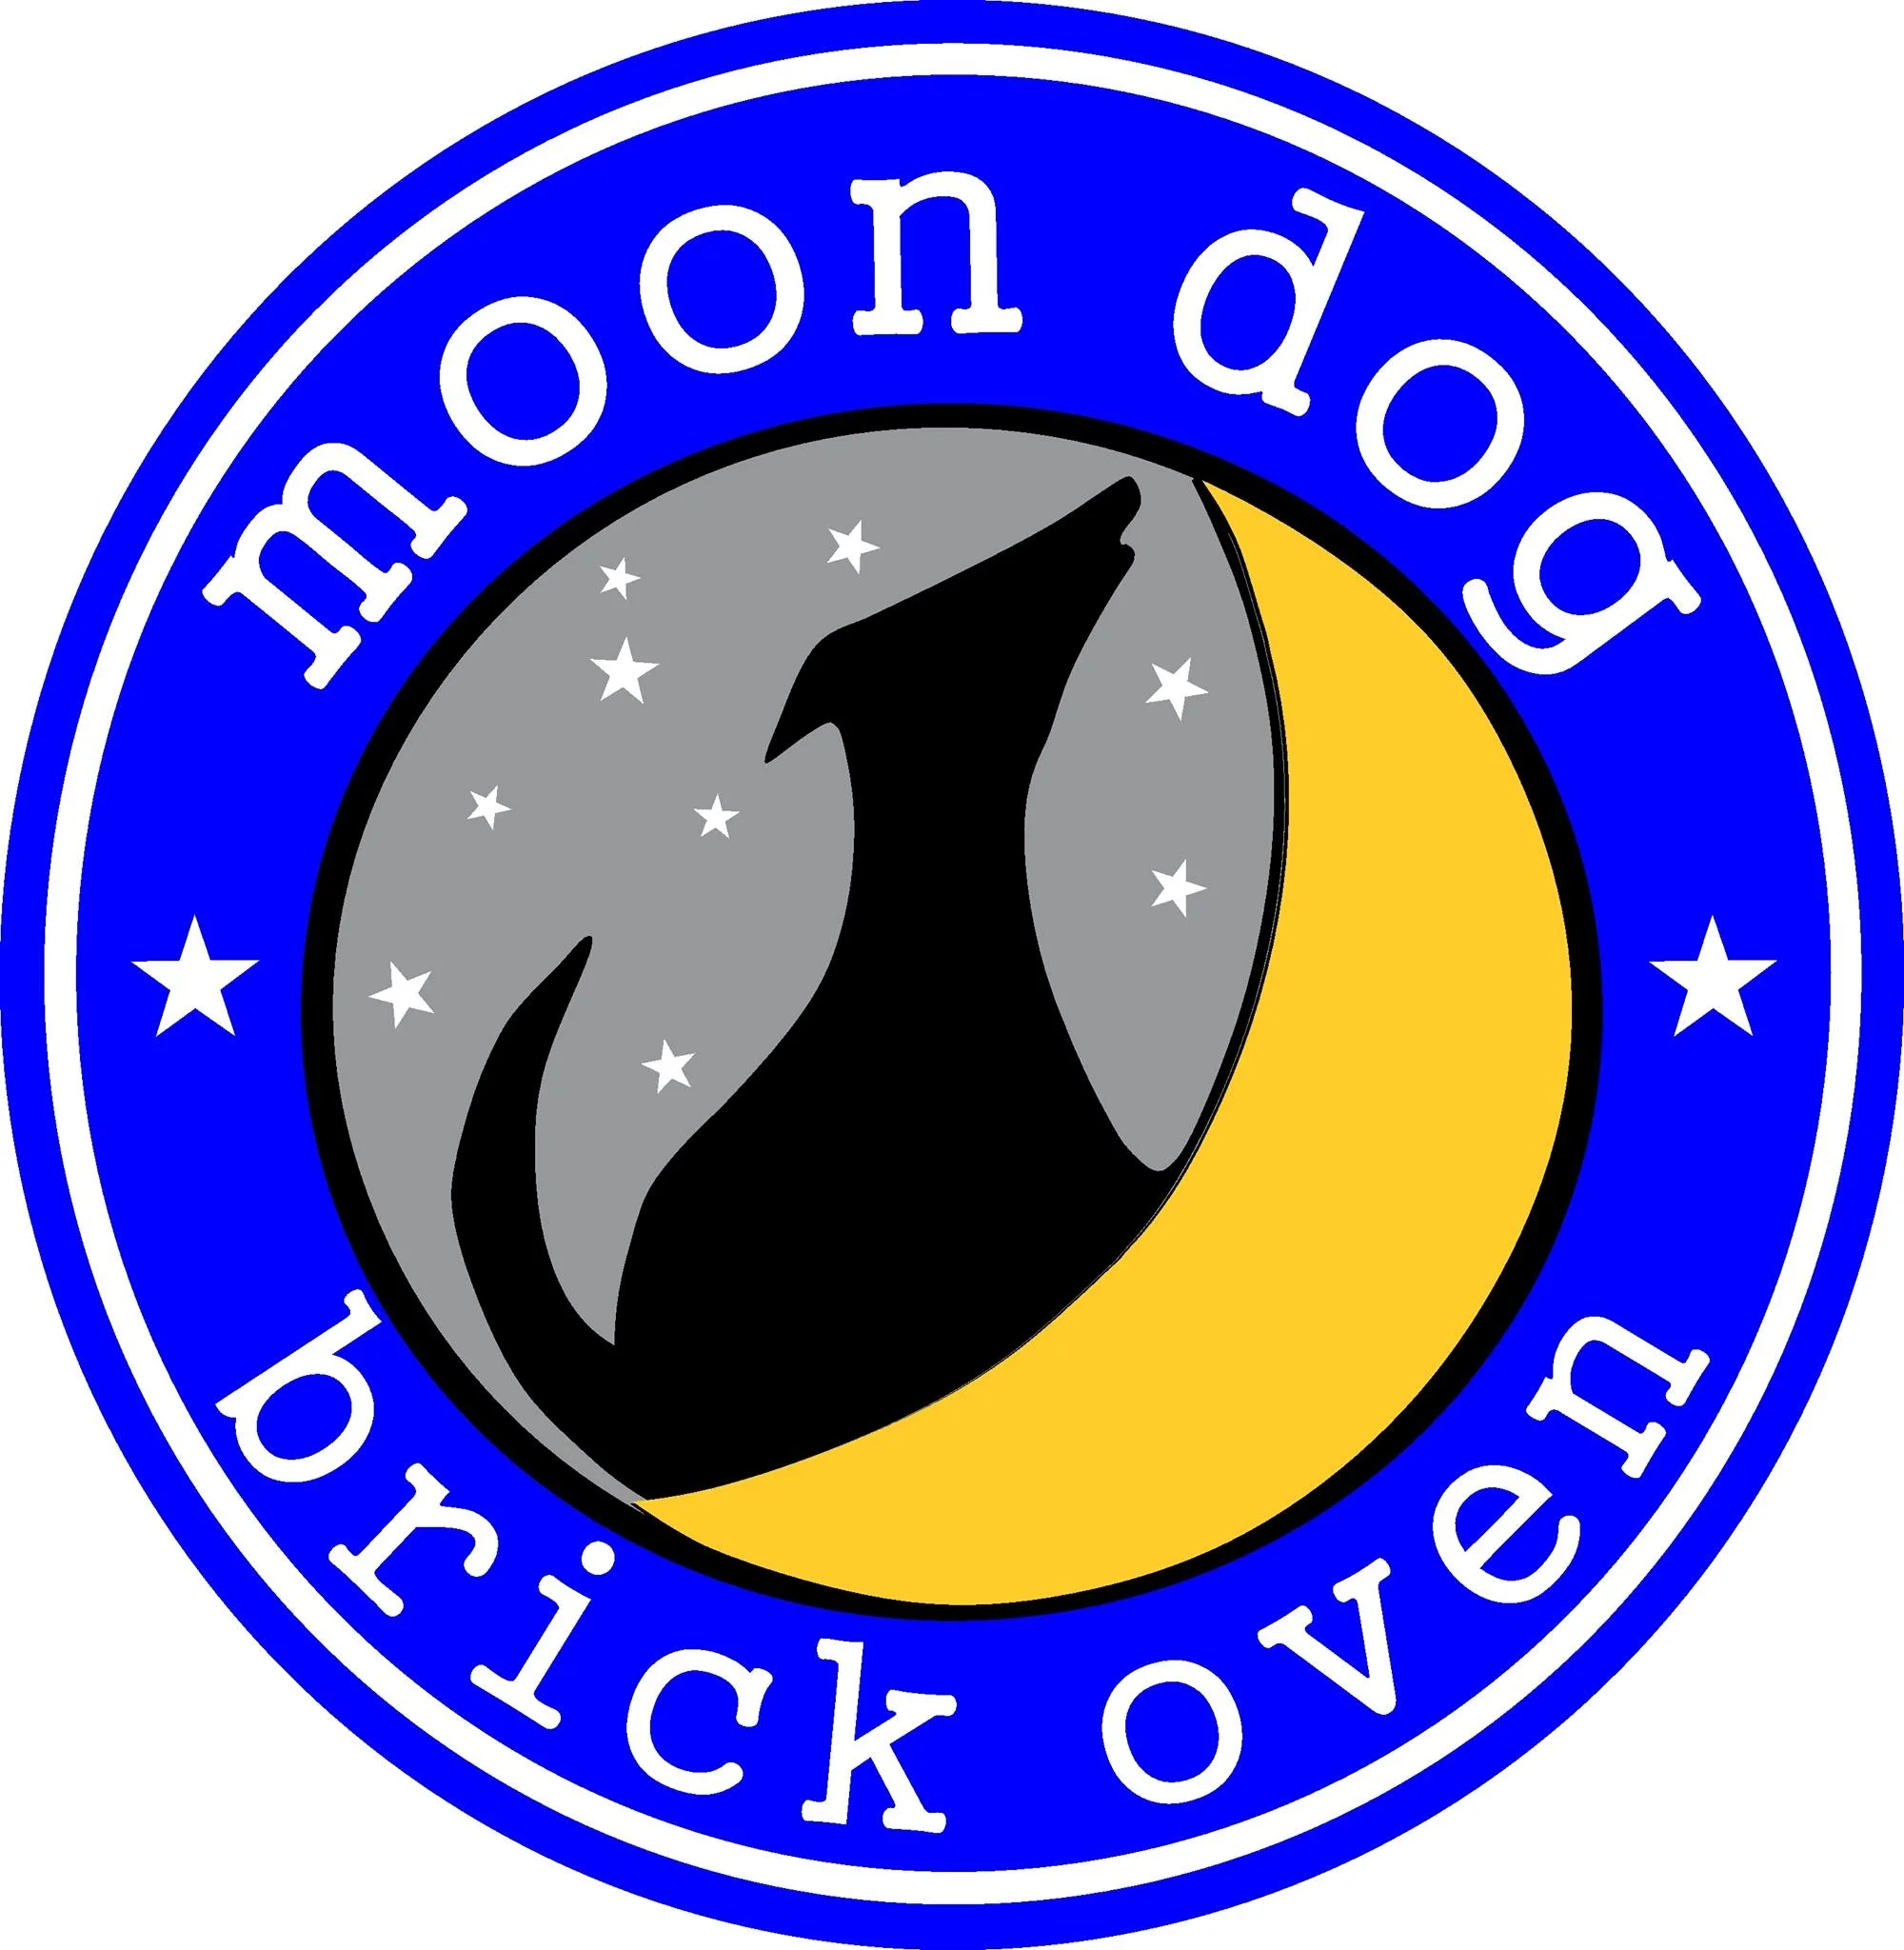 Moon Dog Brick Oven Pizza of Big Stone Gap